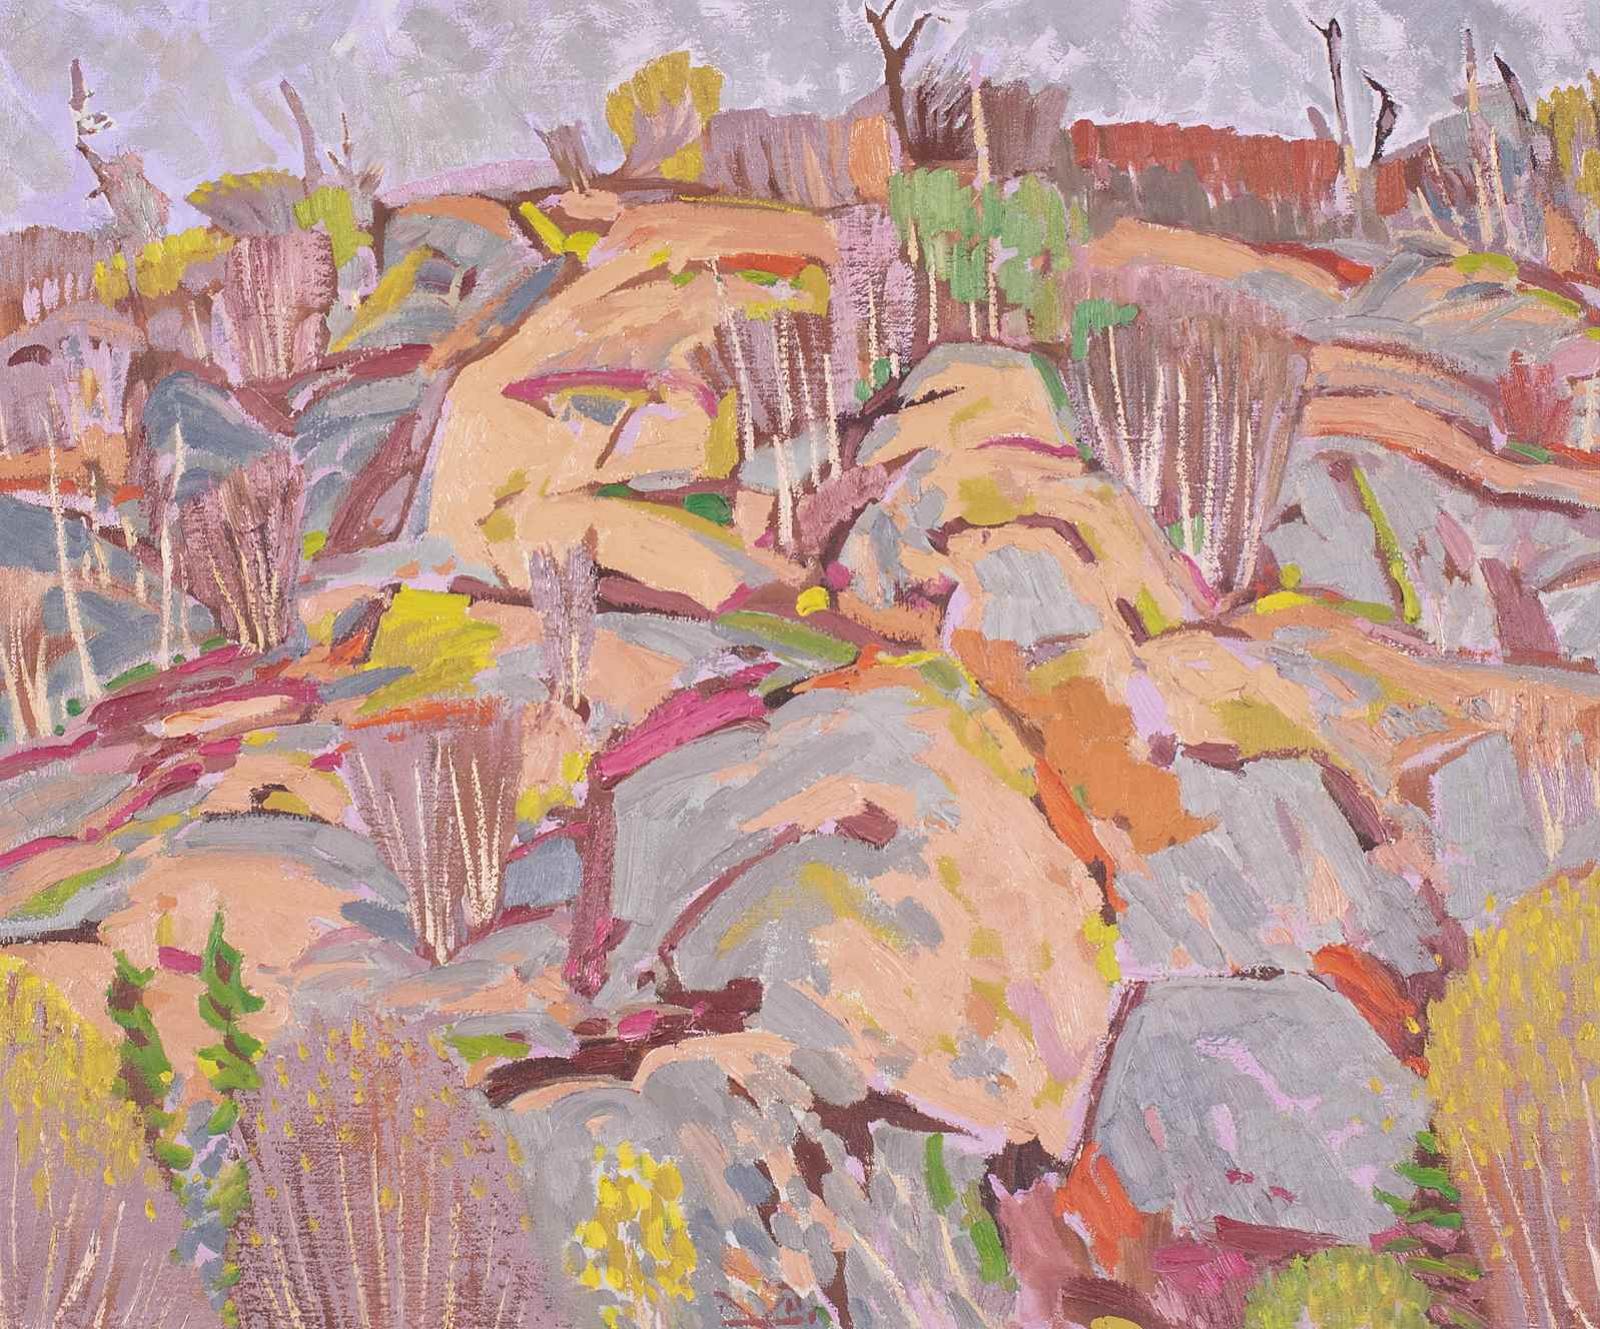 Illingworth Holey (Buck) Kerr (1905-1989) - Rocks, Wawa, Ontario; 1968